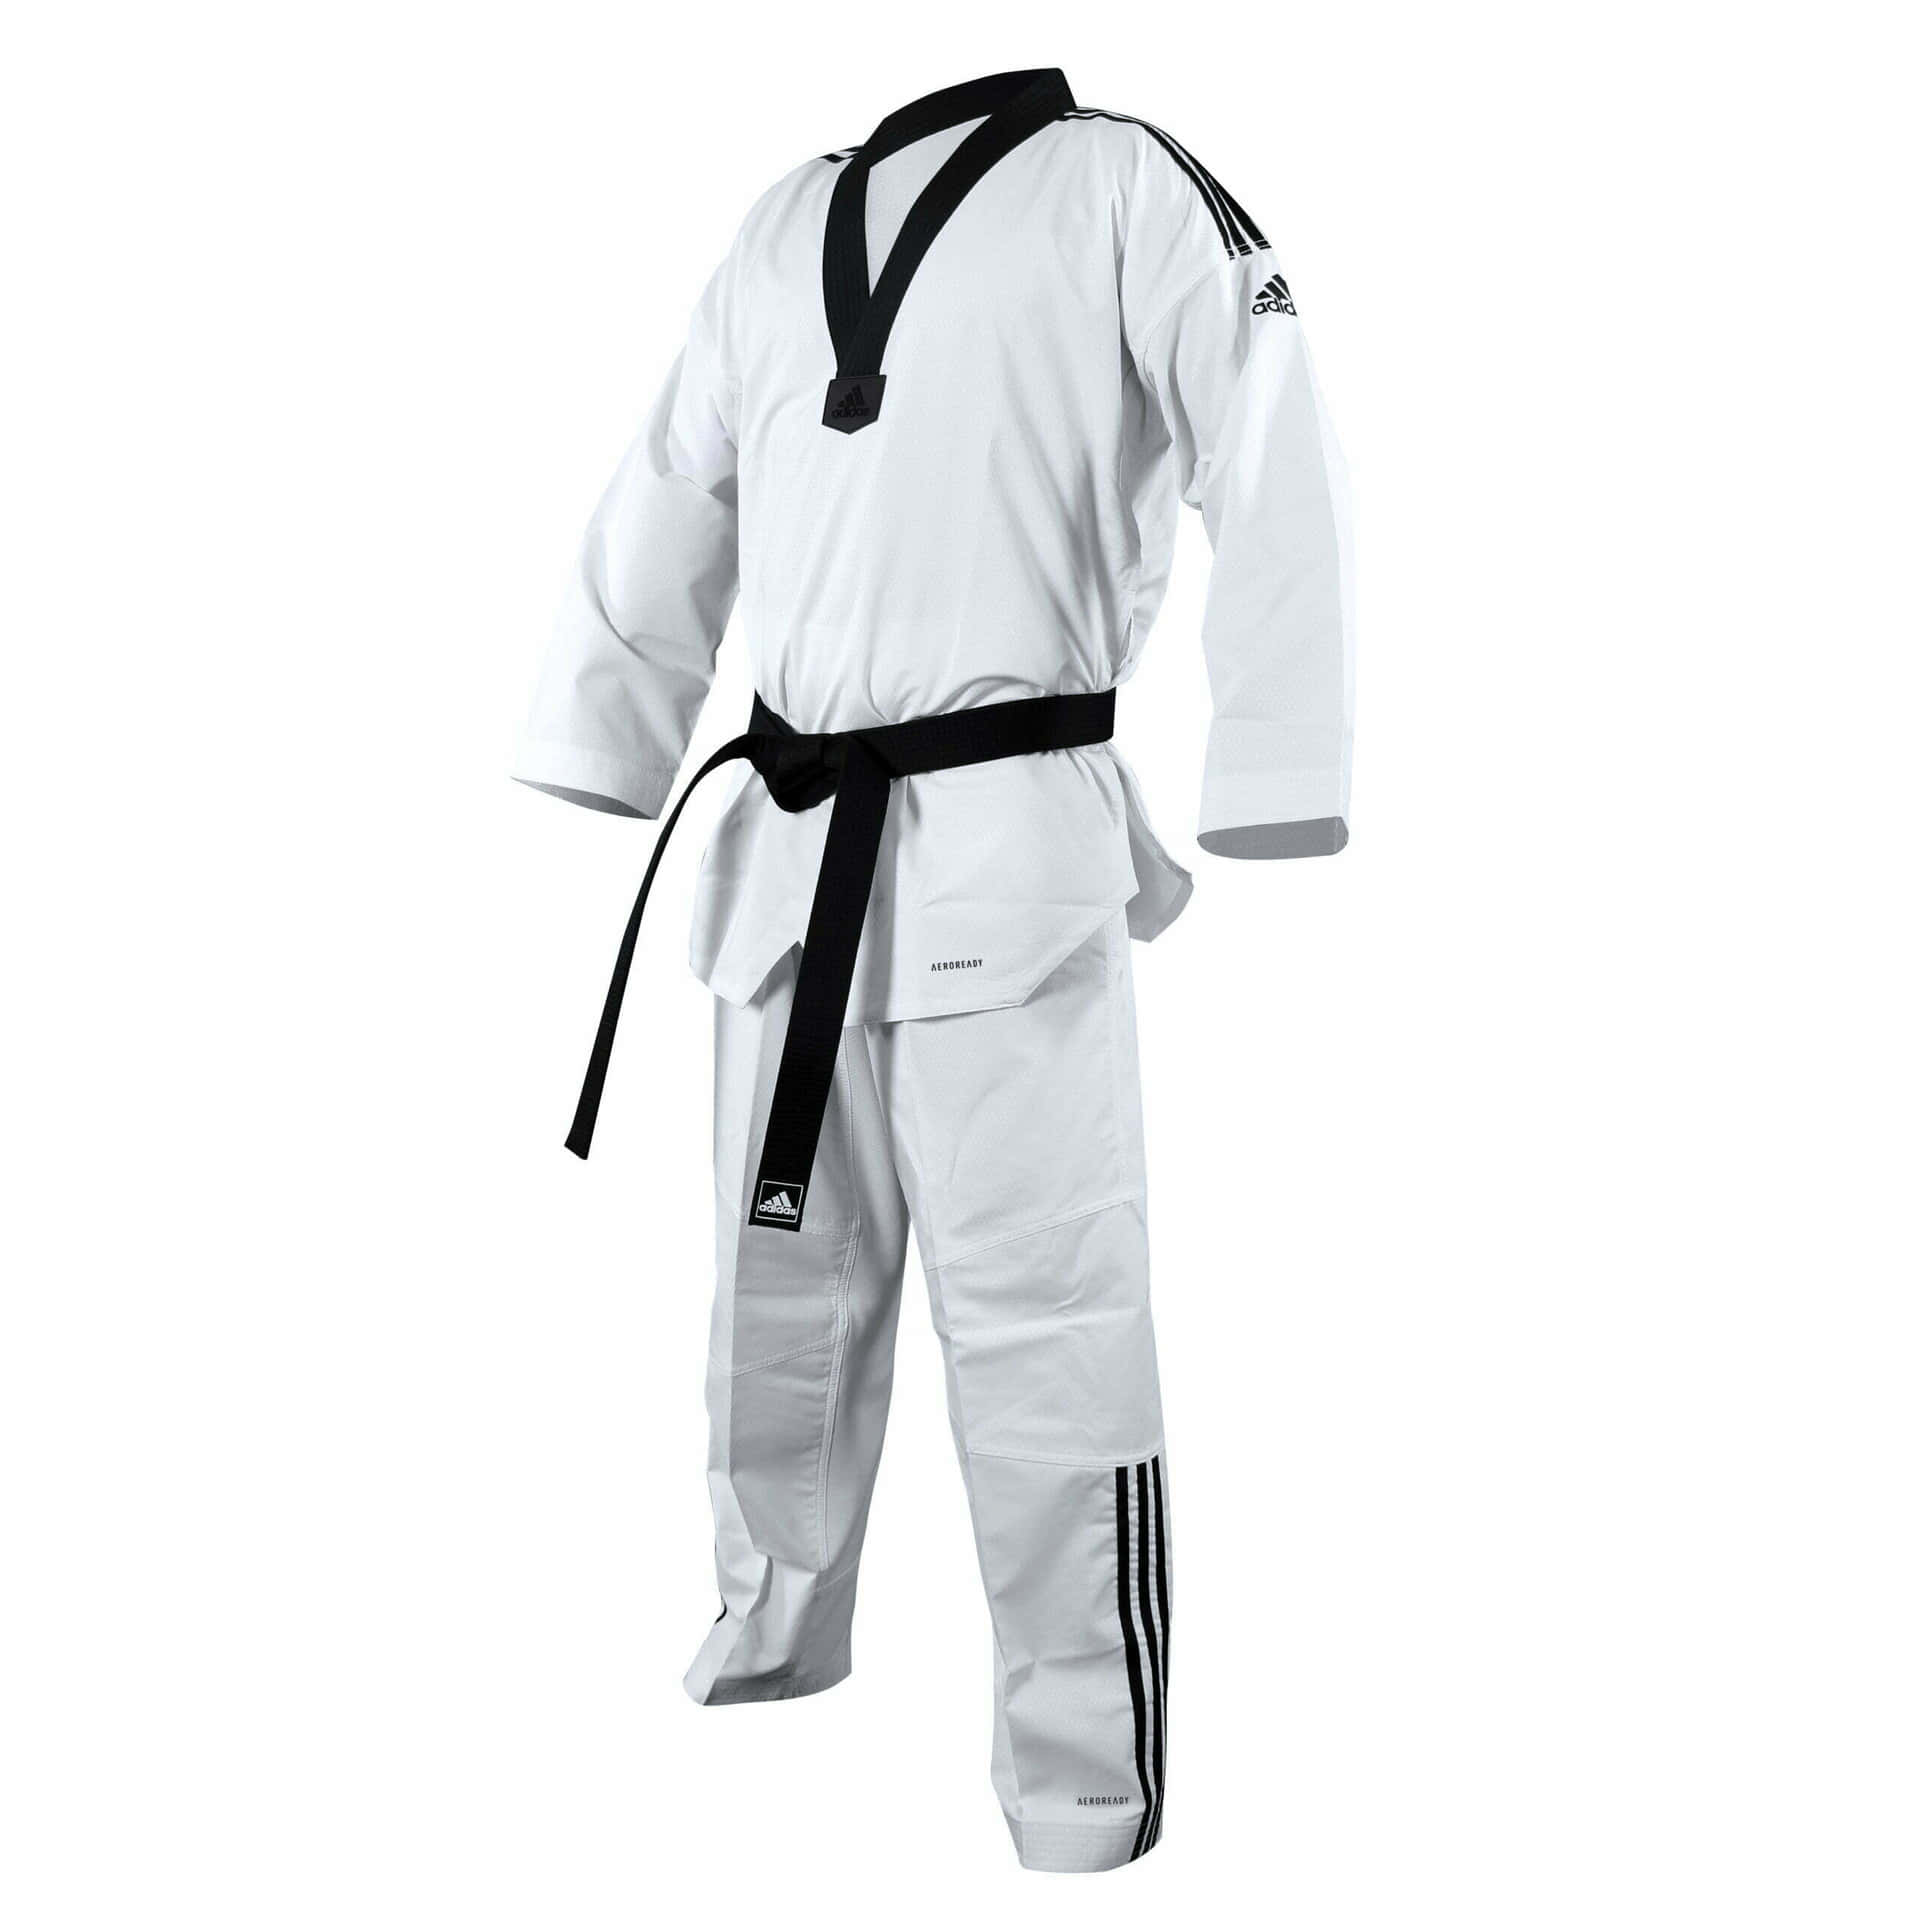 An Athlete in a Taekwondo Uniform Wallpaper